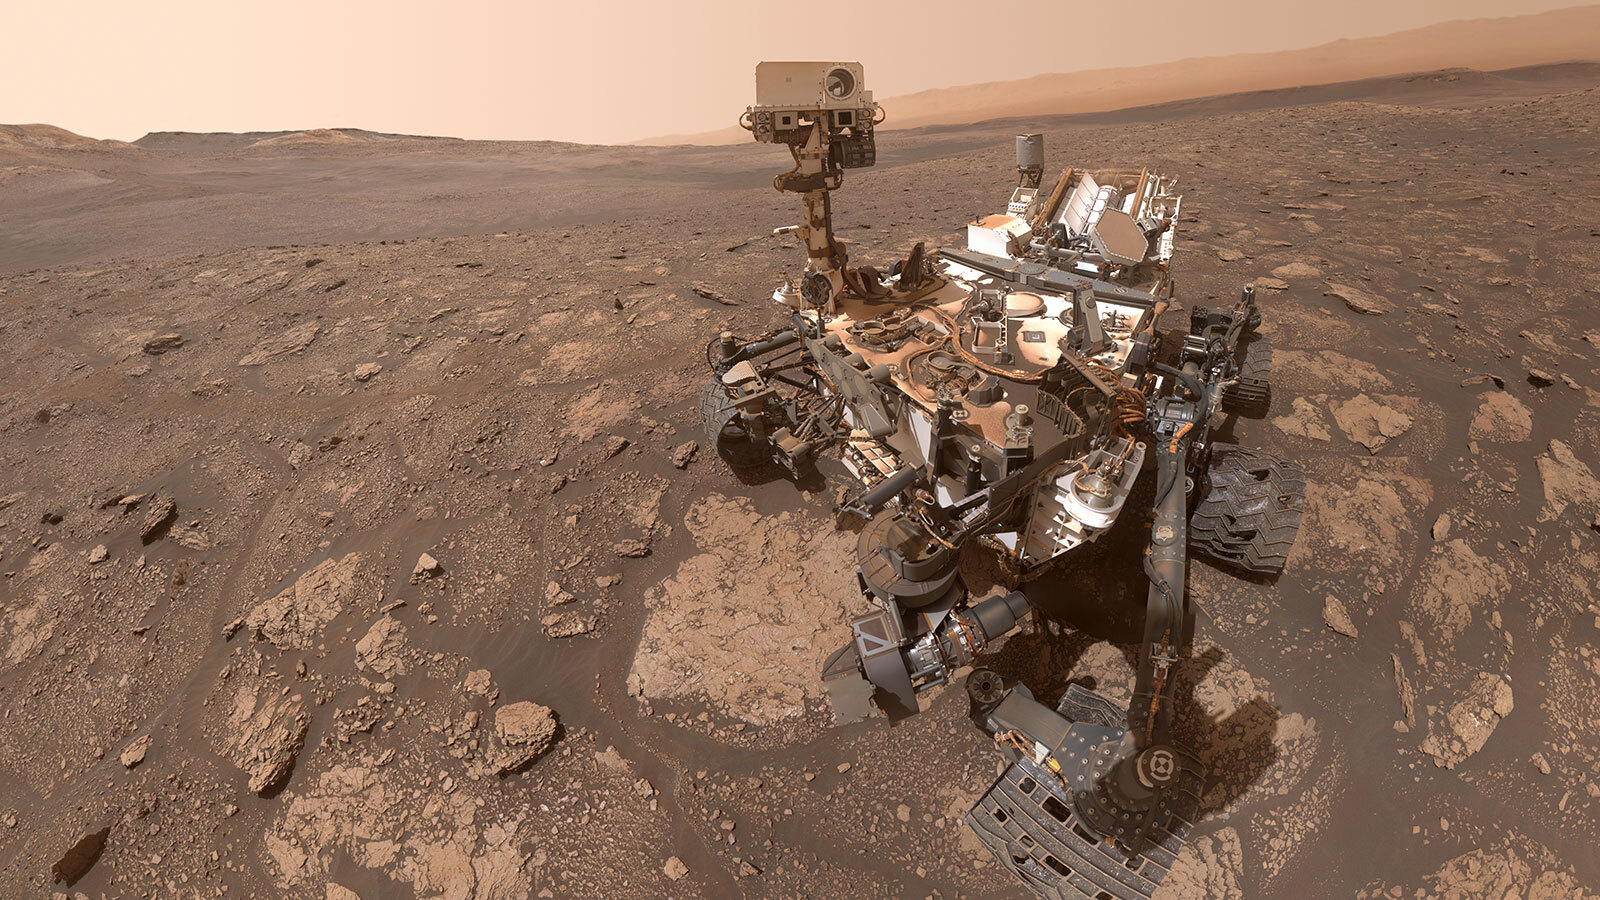 Curiosity Mars rover's selfie